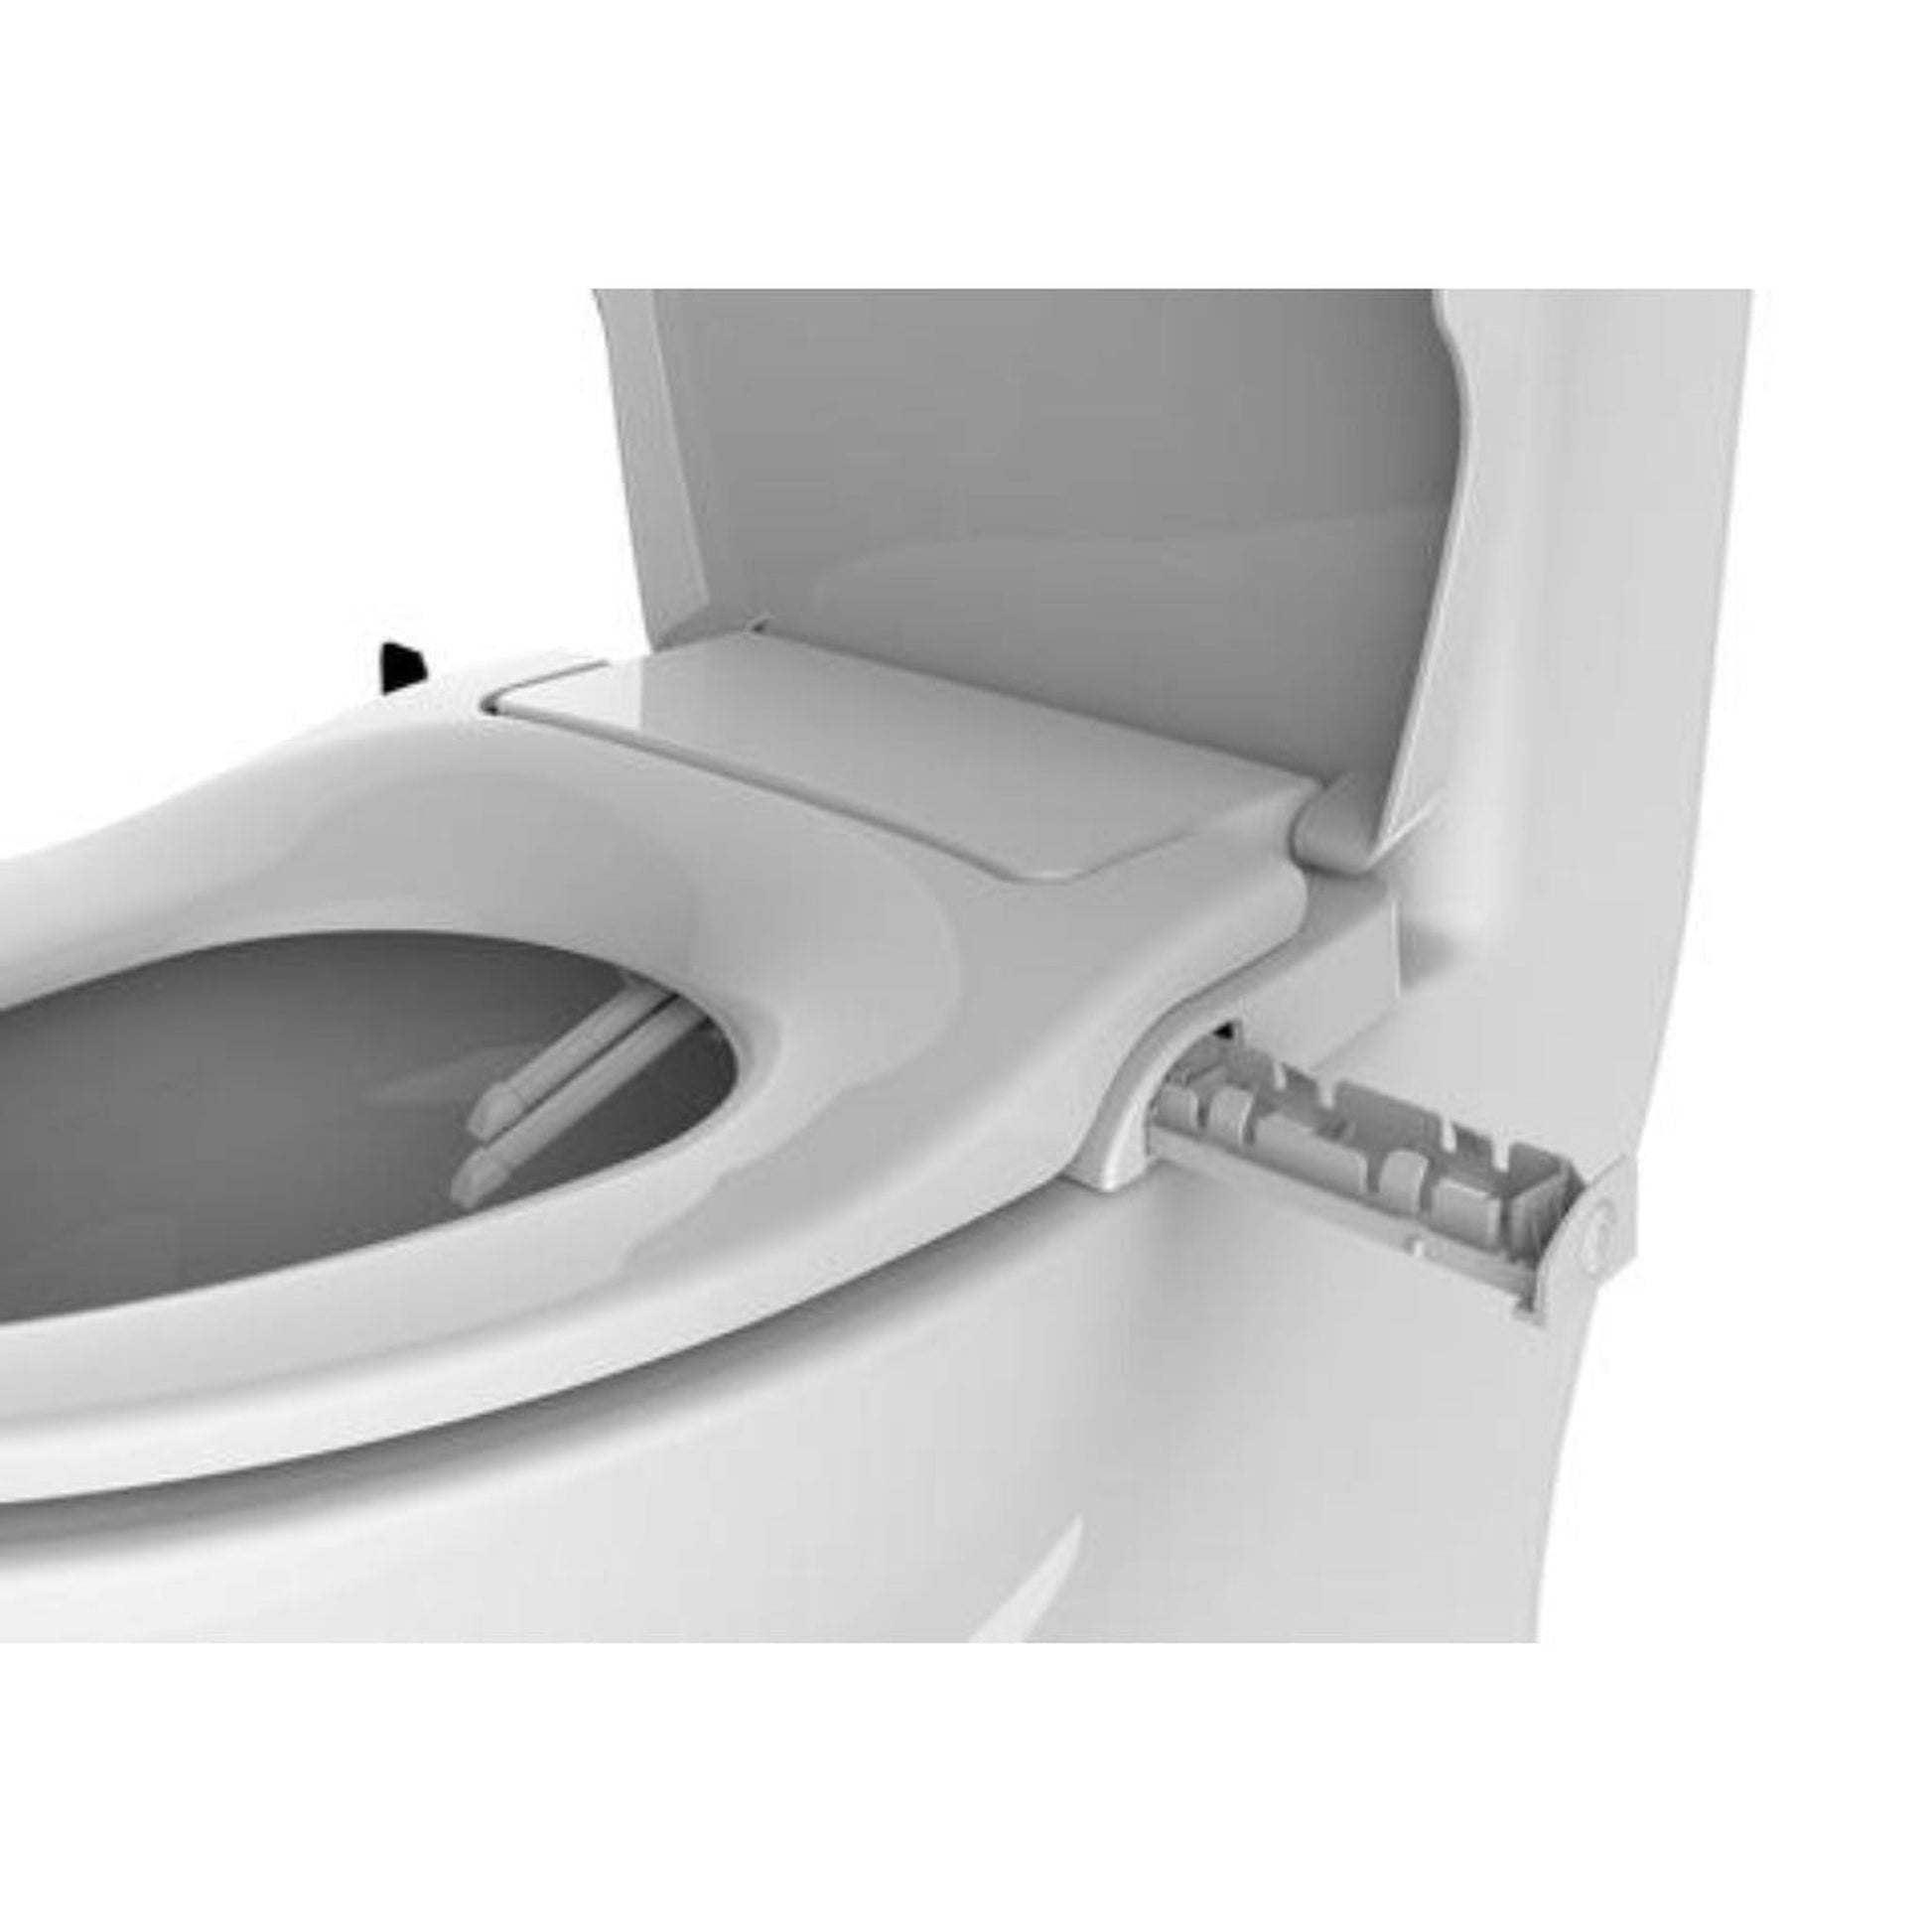 Bio Bidet SlimZero Bidet Toilet Seat in White, Elongated